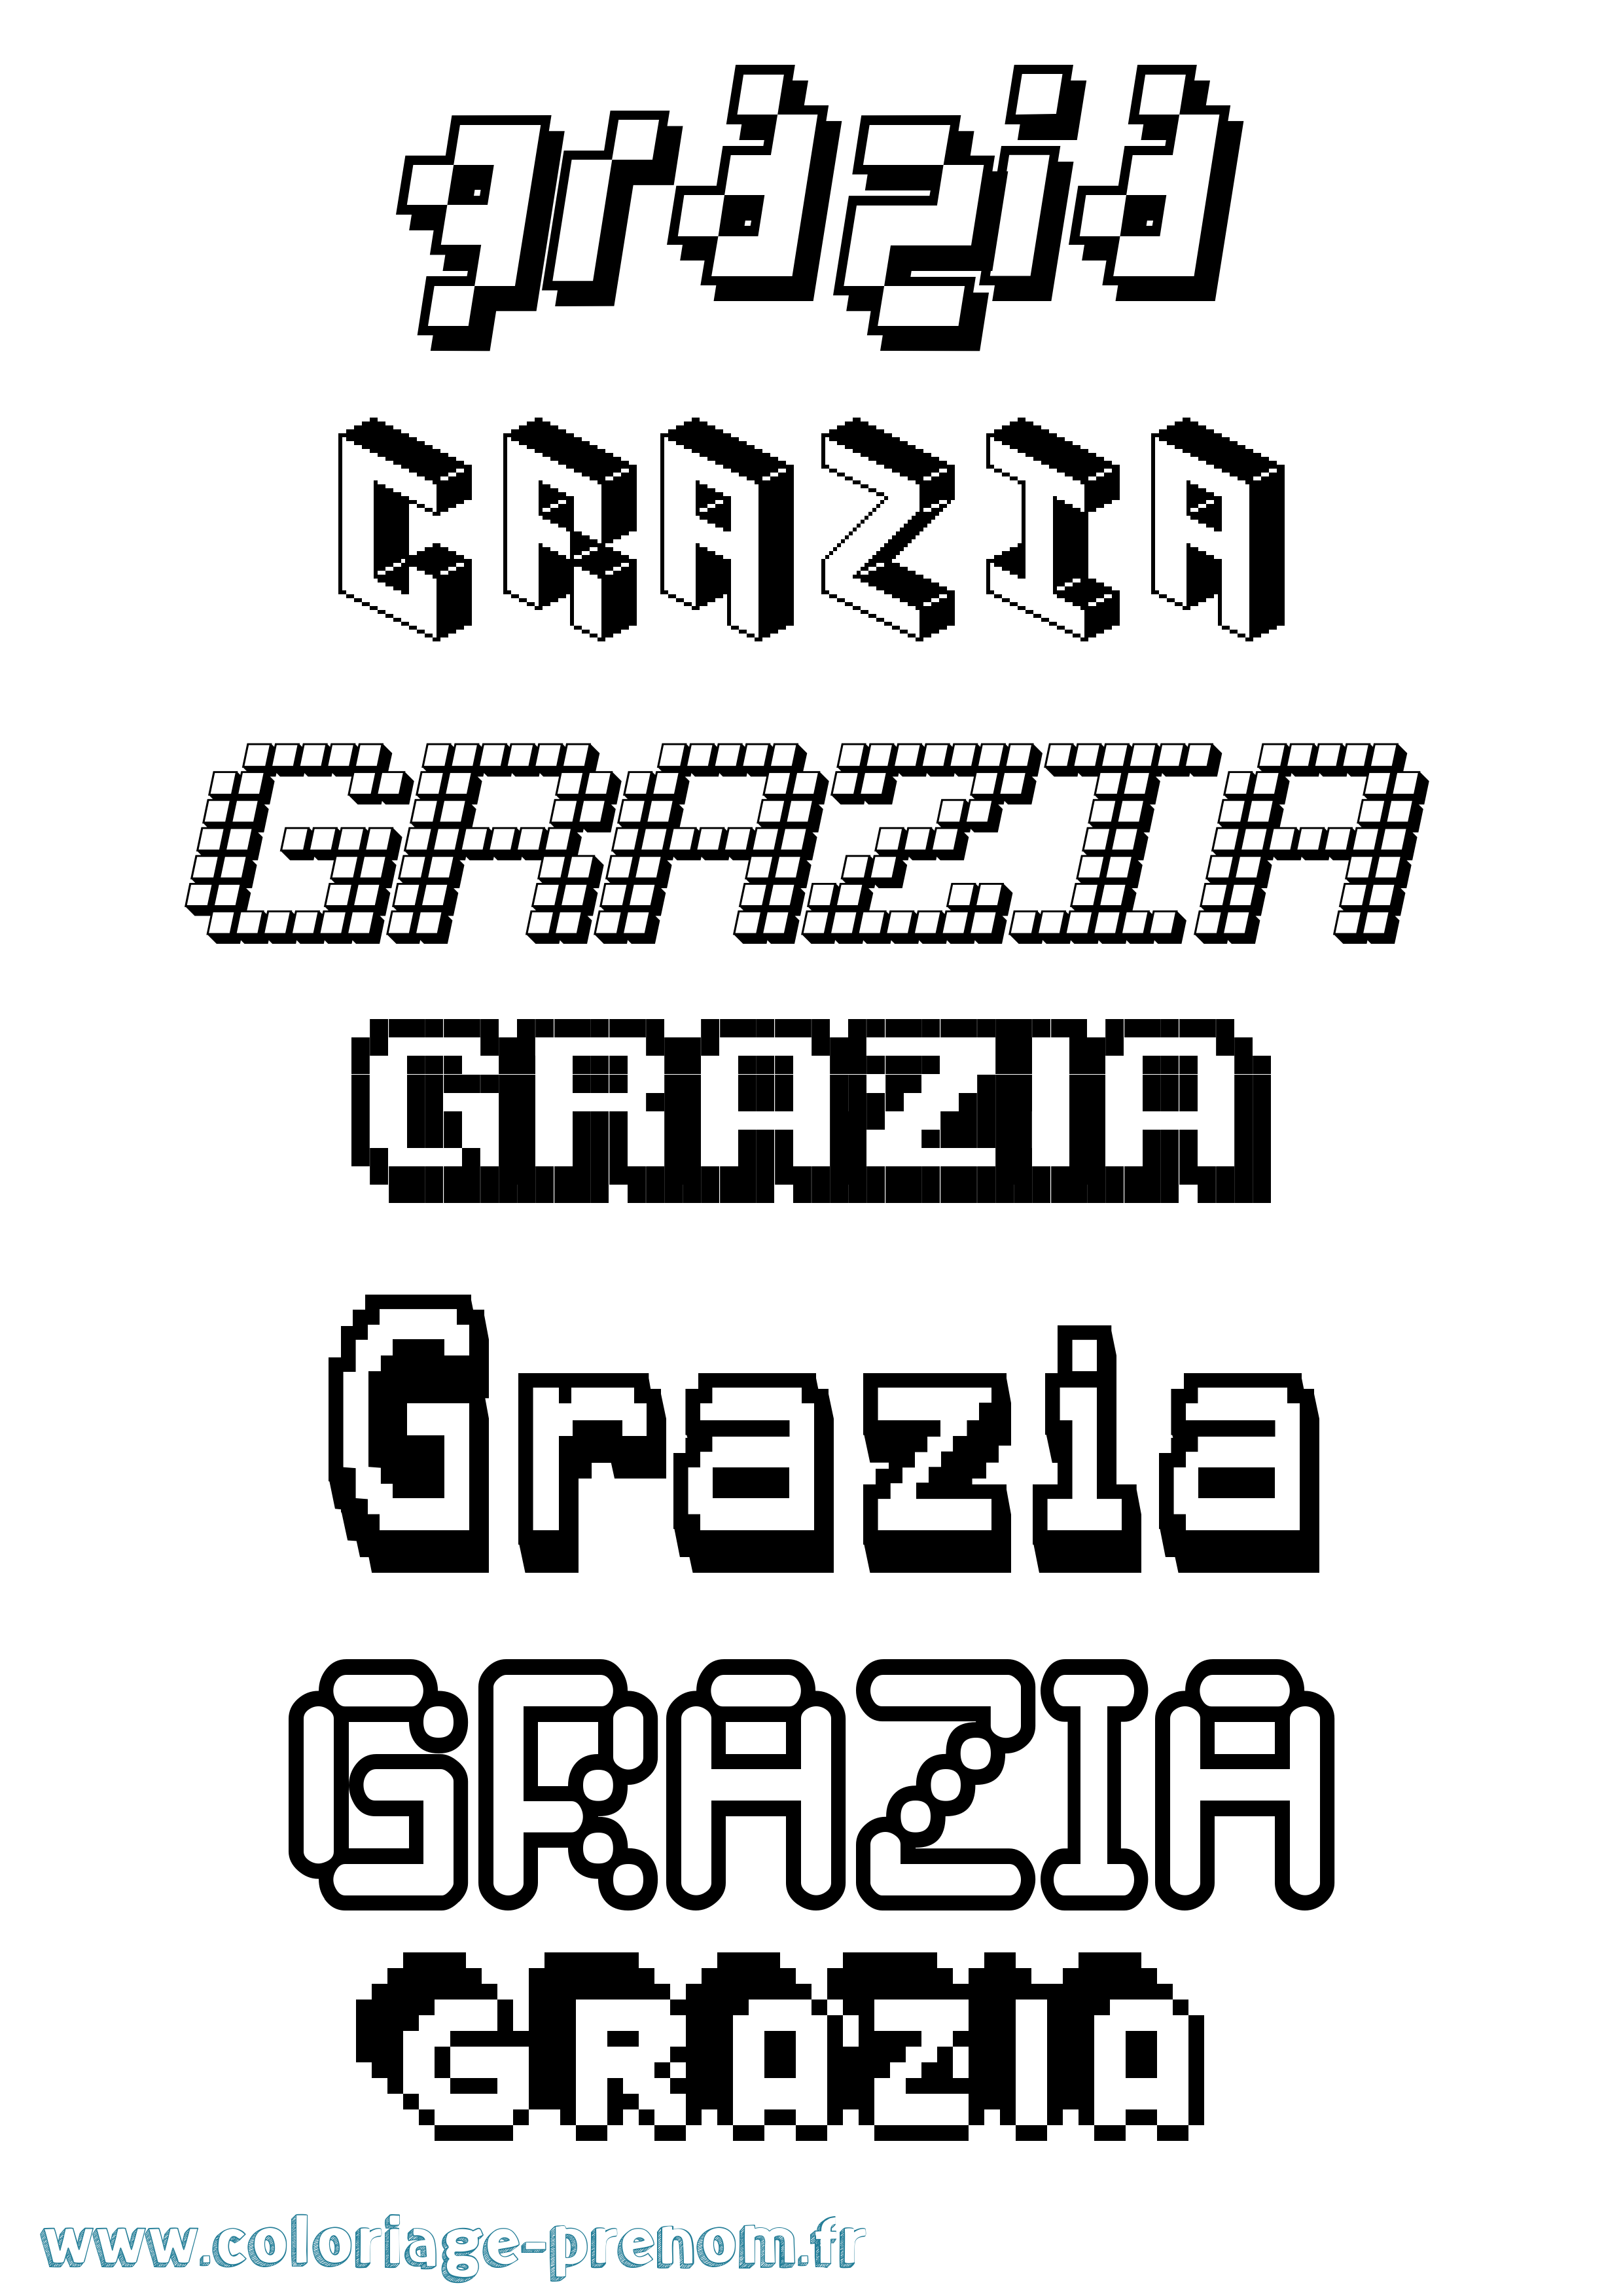 Coloriage prénom Grazia Pixel